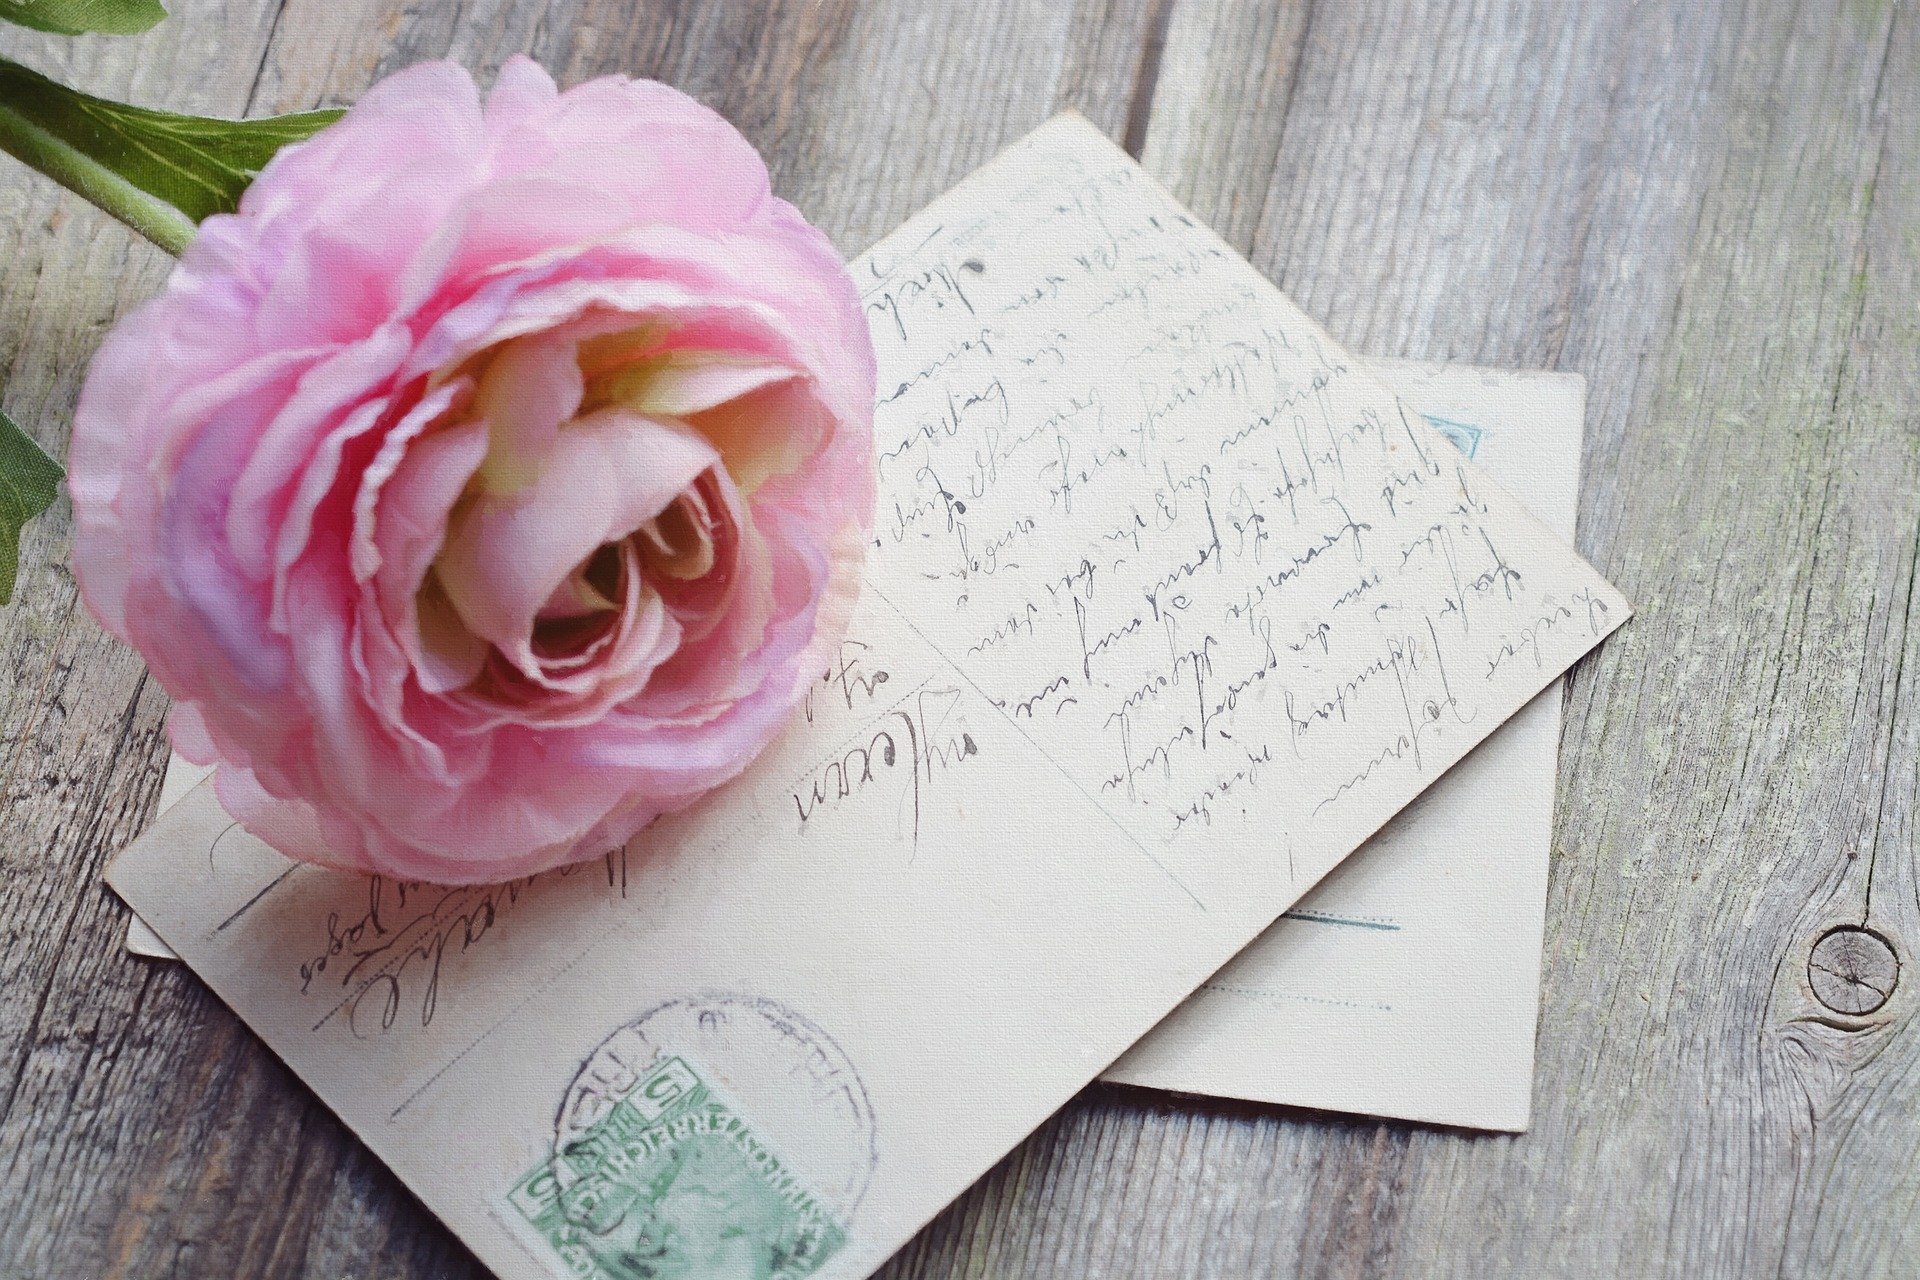 Postcard and a flower. | Source: Pixabay